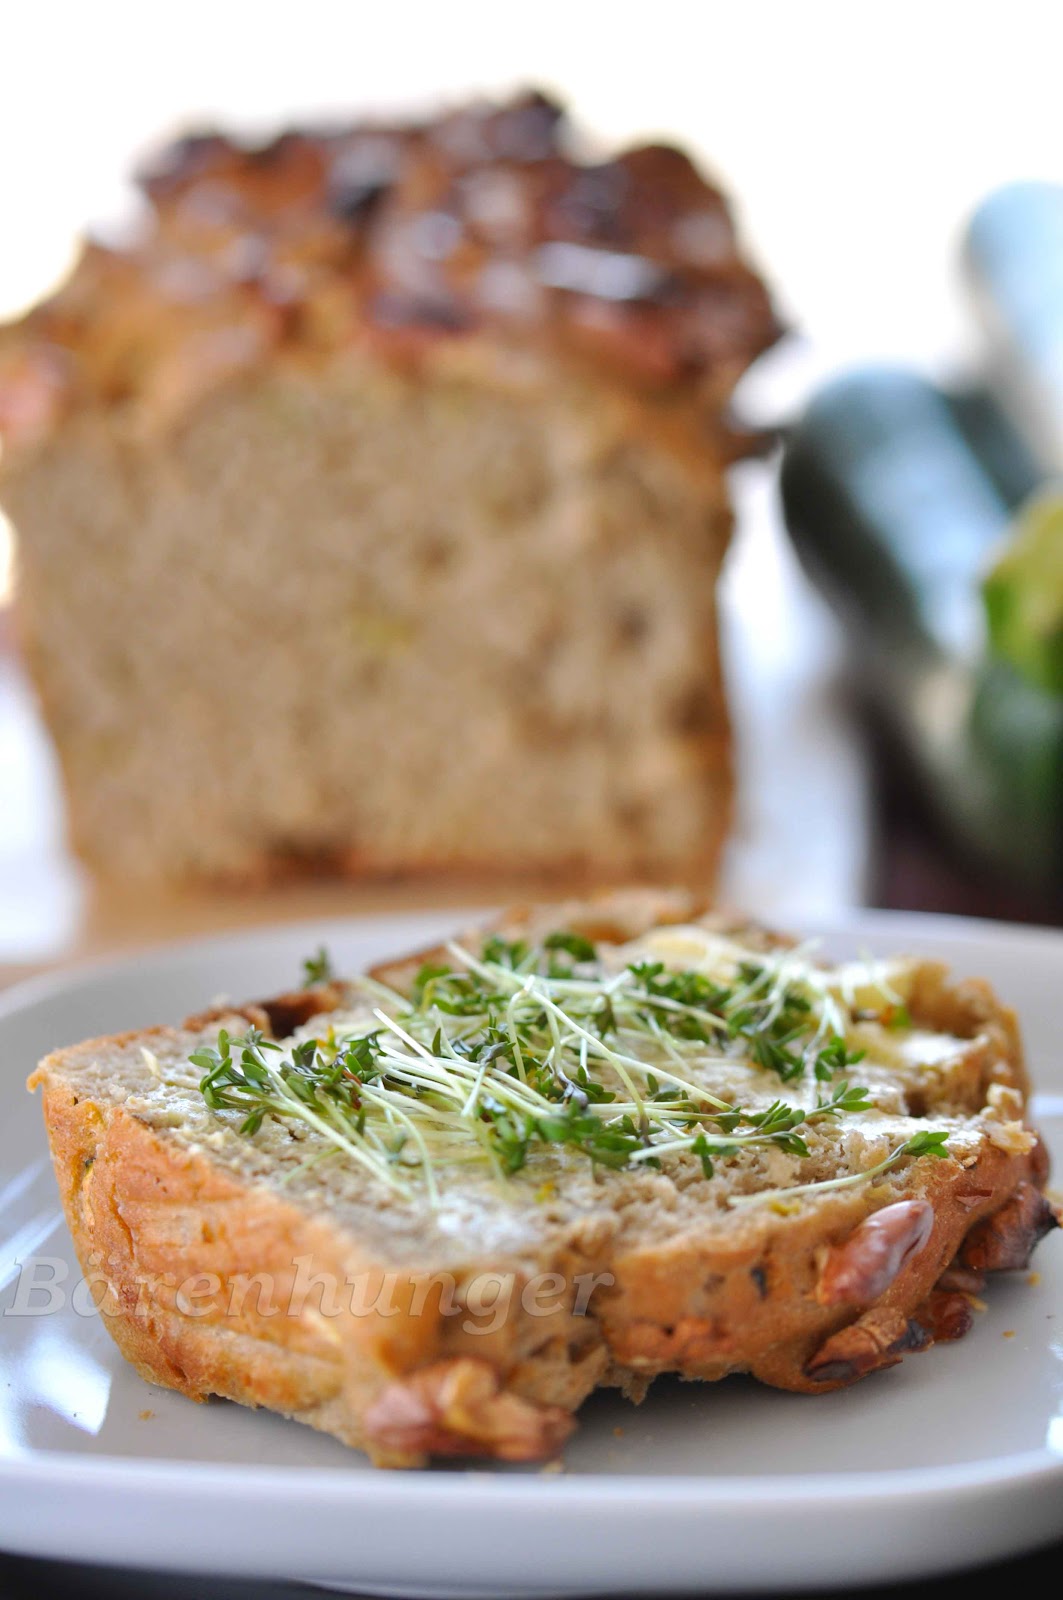 Zucchini Rosmarin Walnuss Brot | Bärenhunger